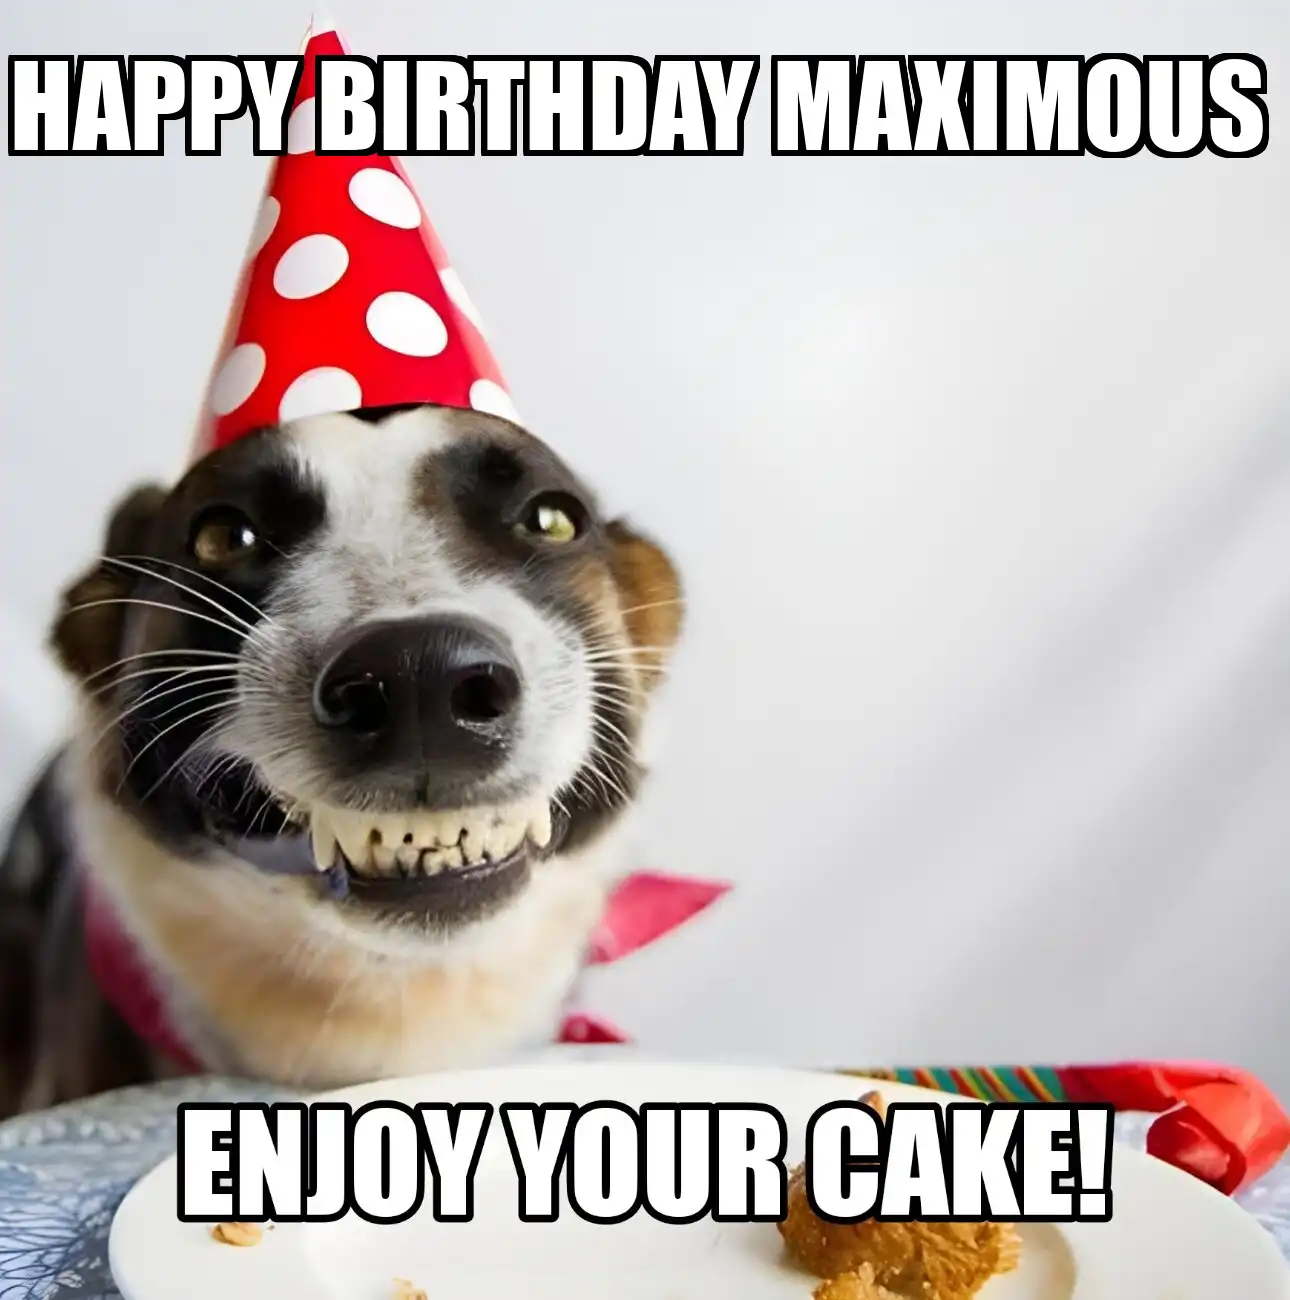 Happy Birthday Maximous Enjoy Your Cake Dog Meme